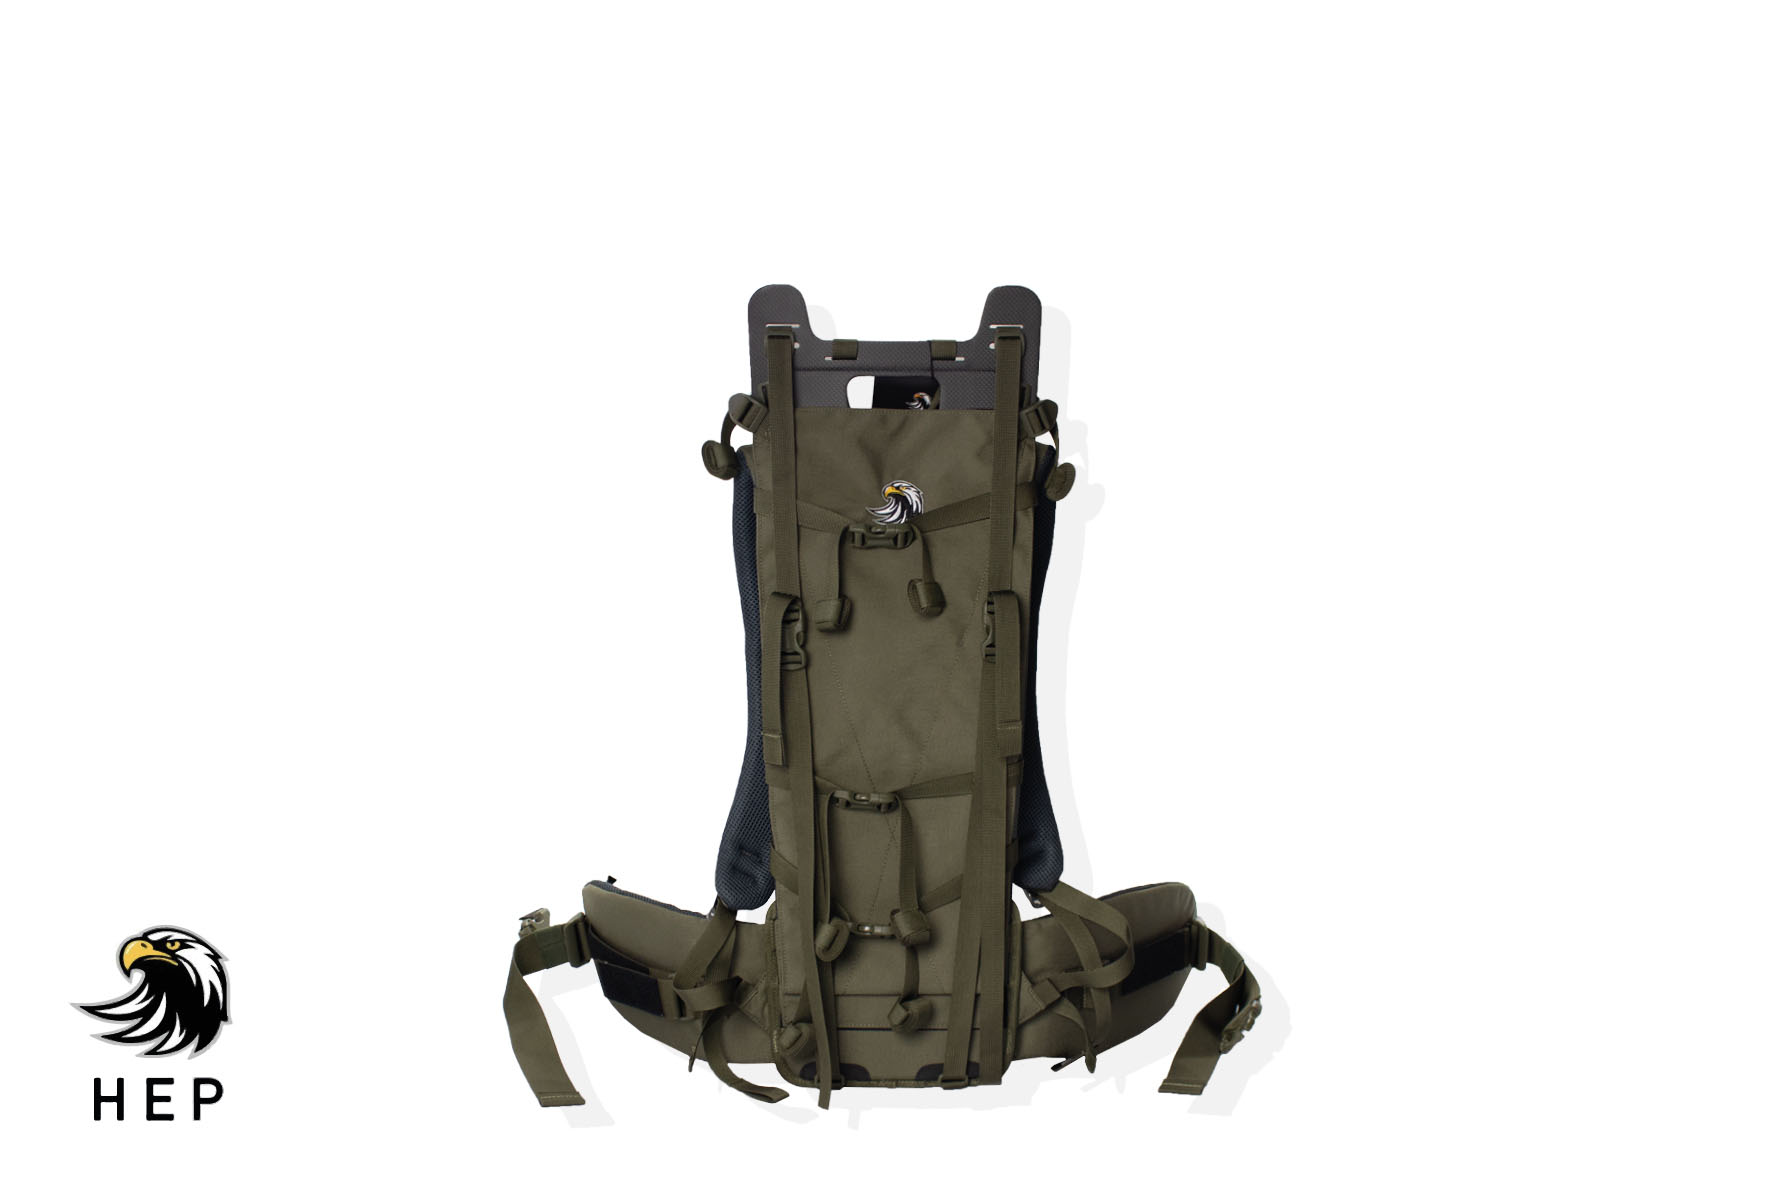 Load - Backpack "Lastenkraxe" - Carbon 